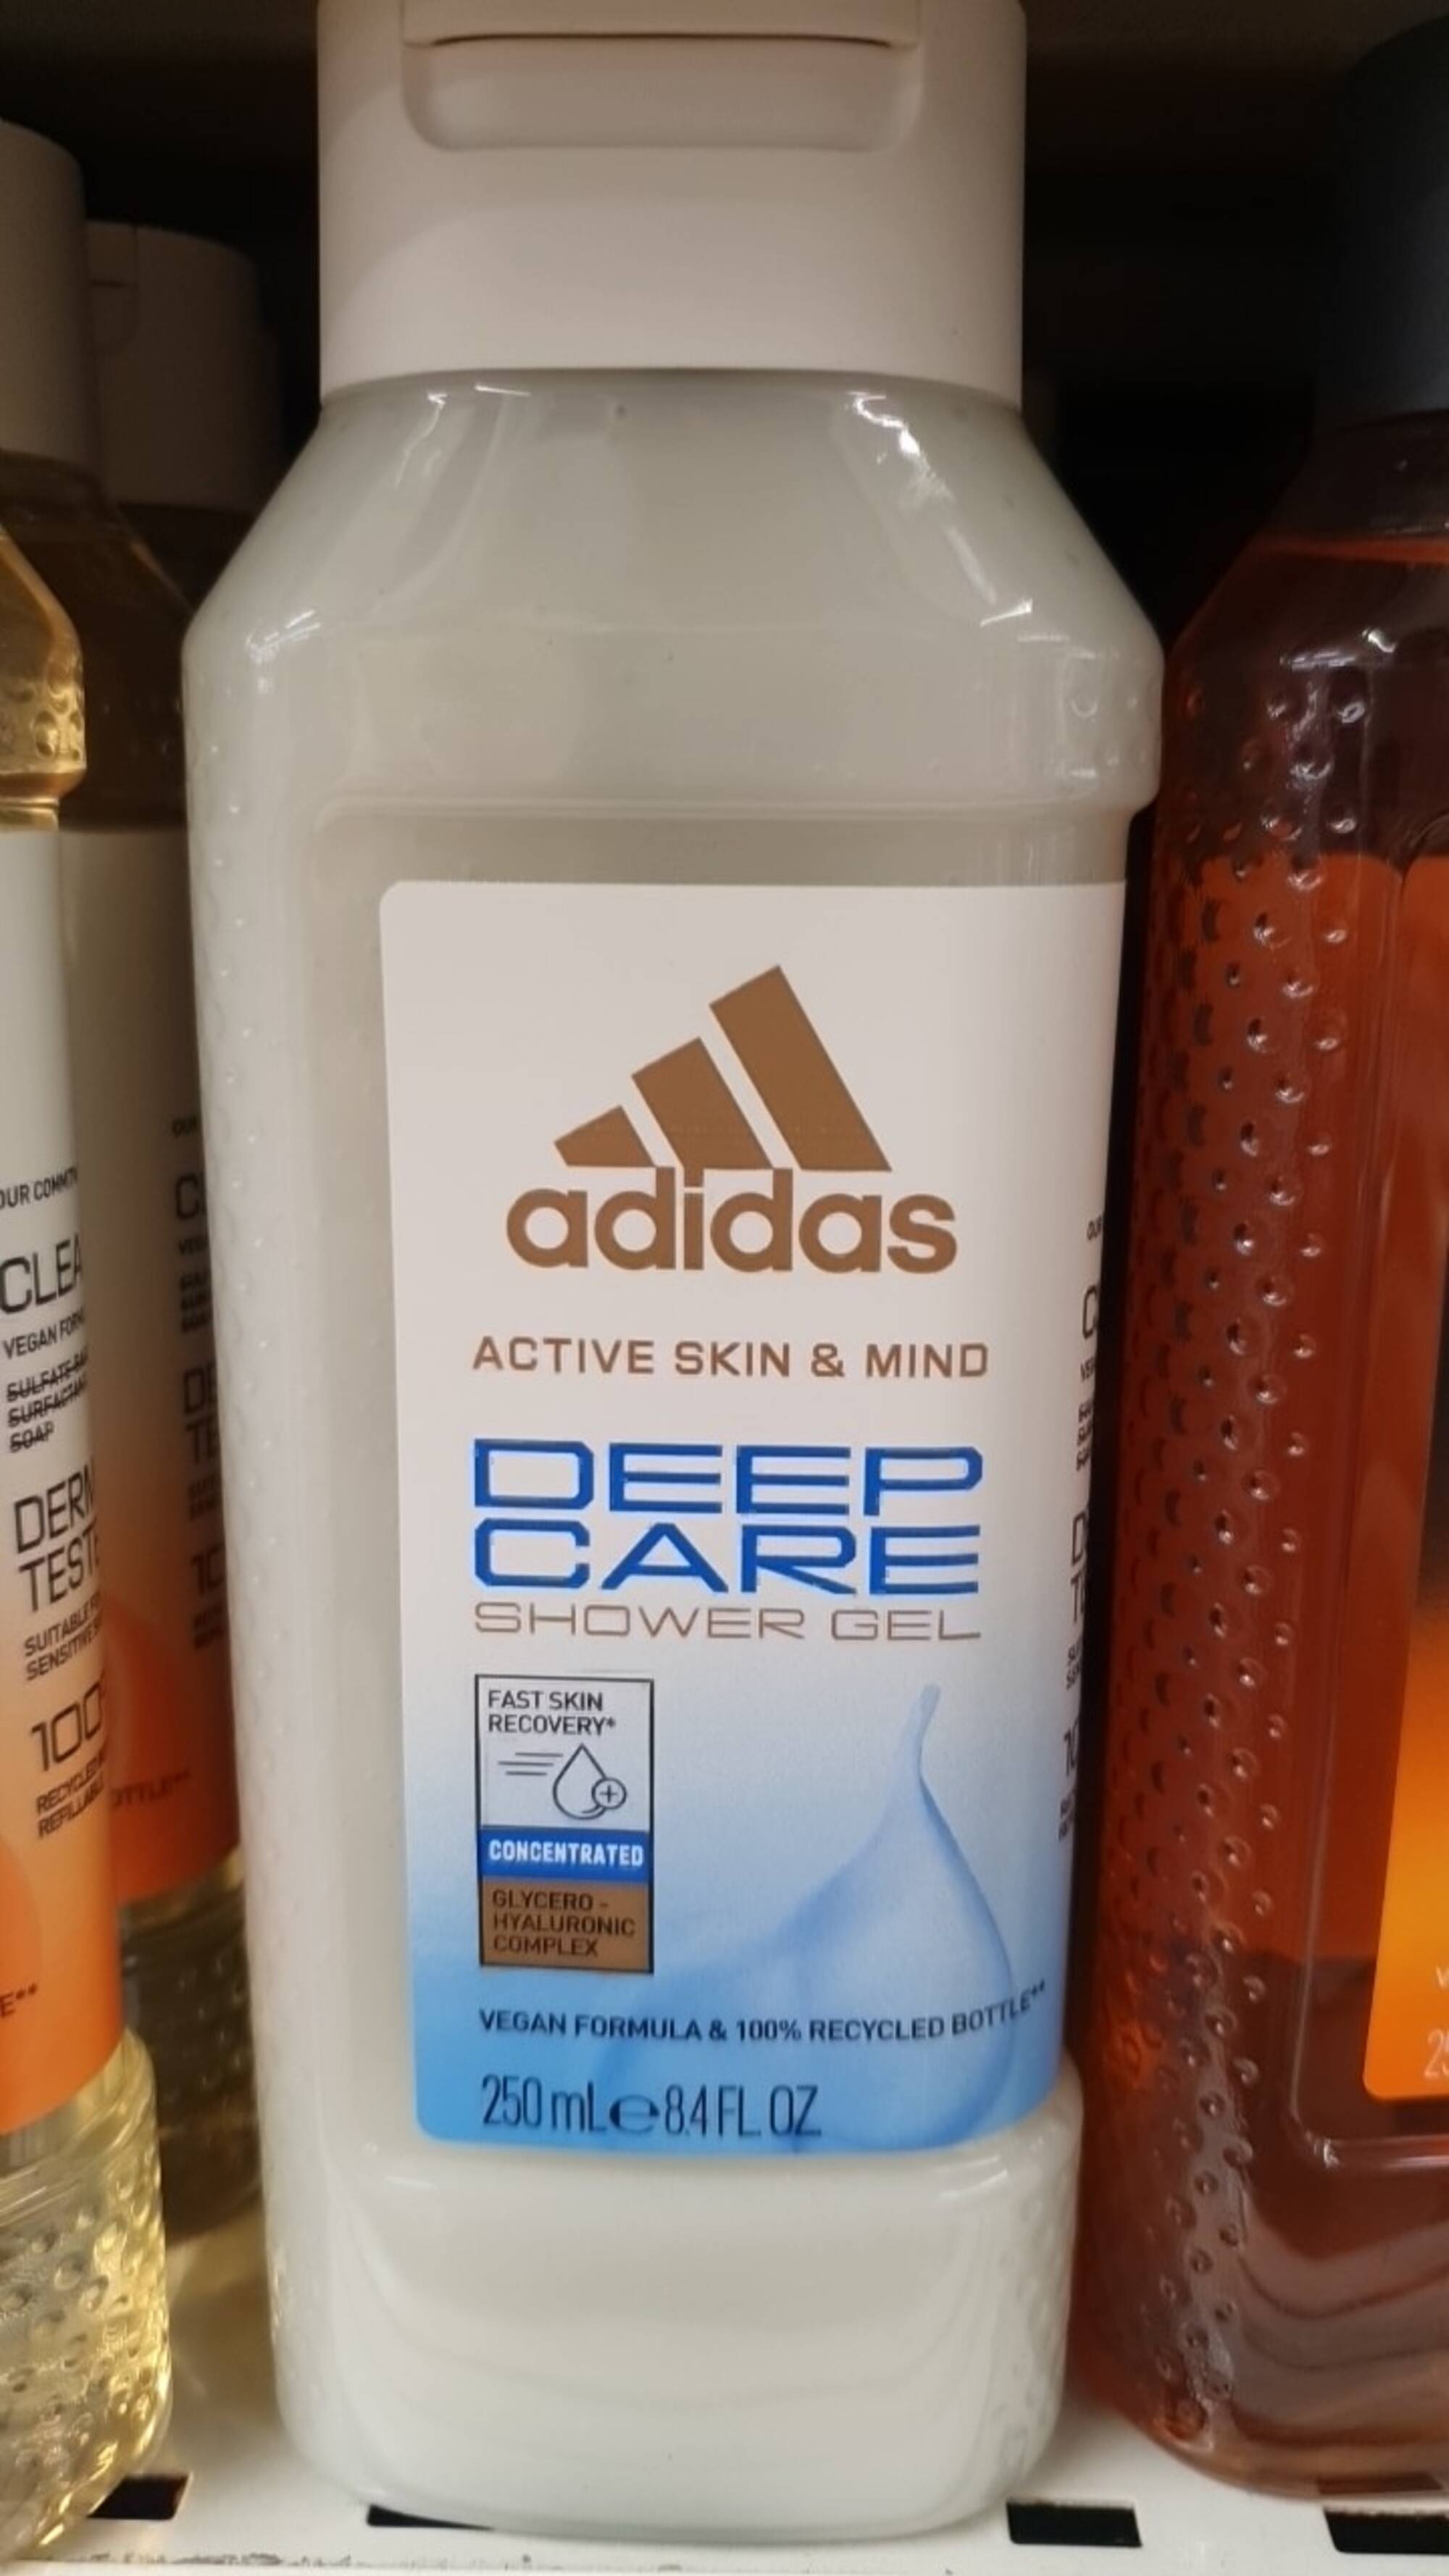 ADIDAS - Deep care - Shower gel